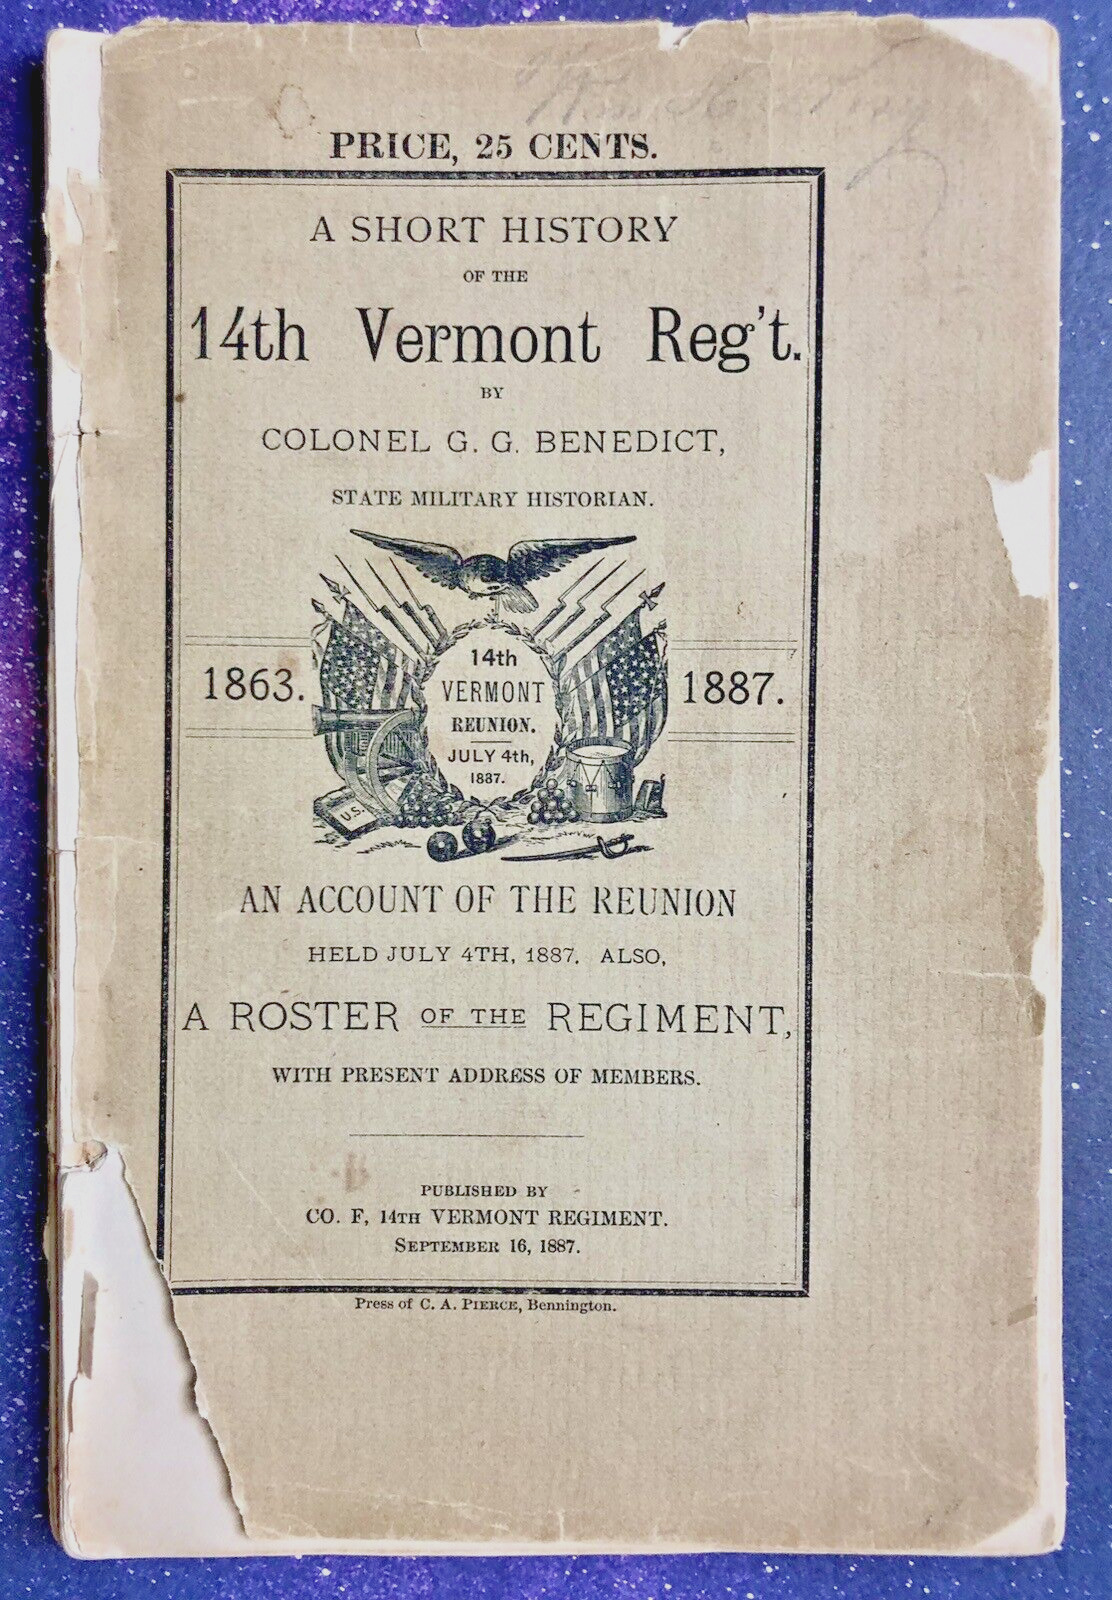 Gettysburg Soldier Signed - A Short History 14th Vermont Regiment,  GG Benedict